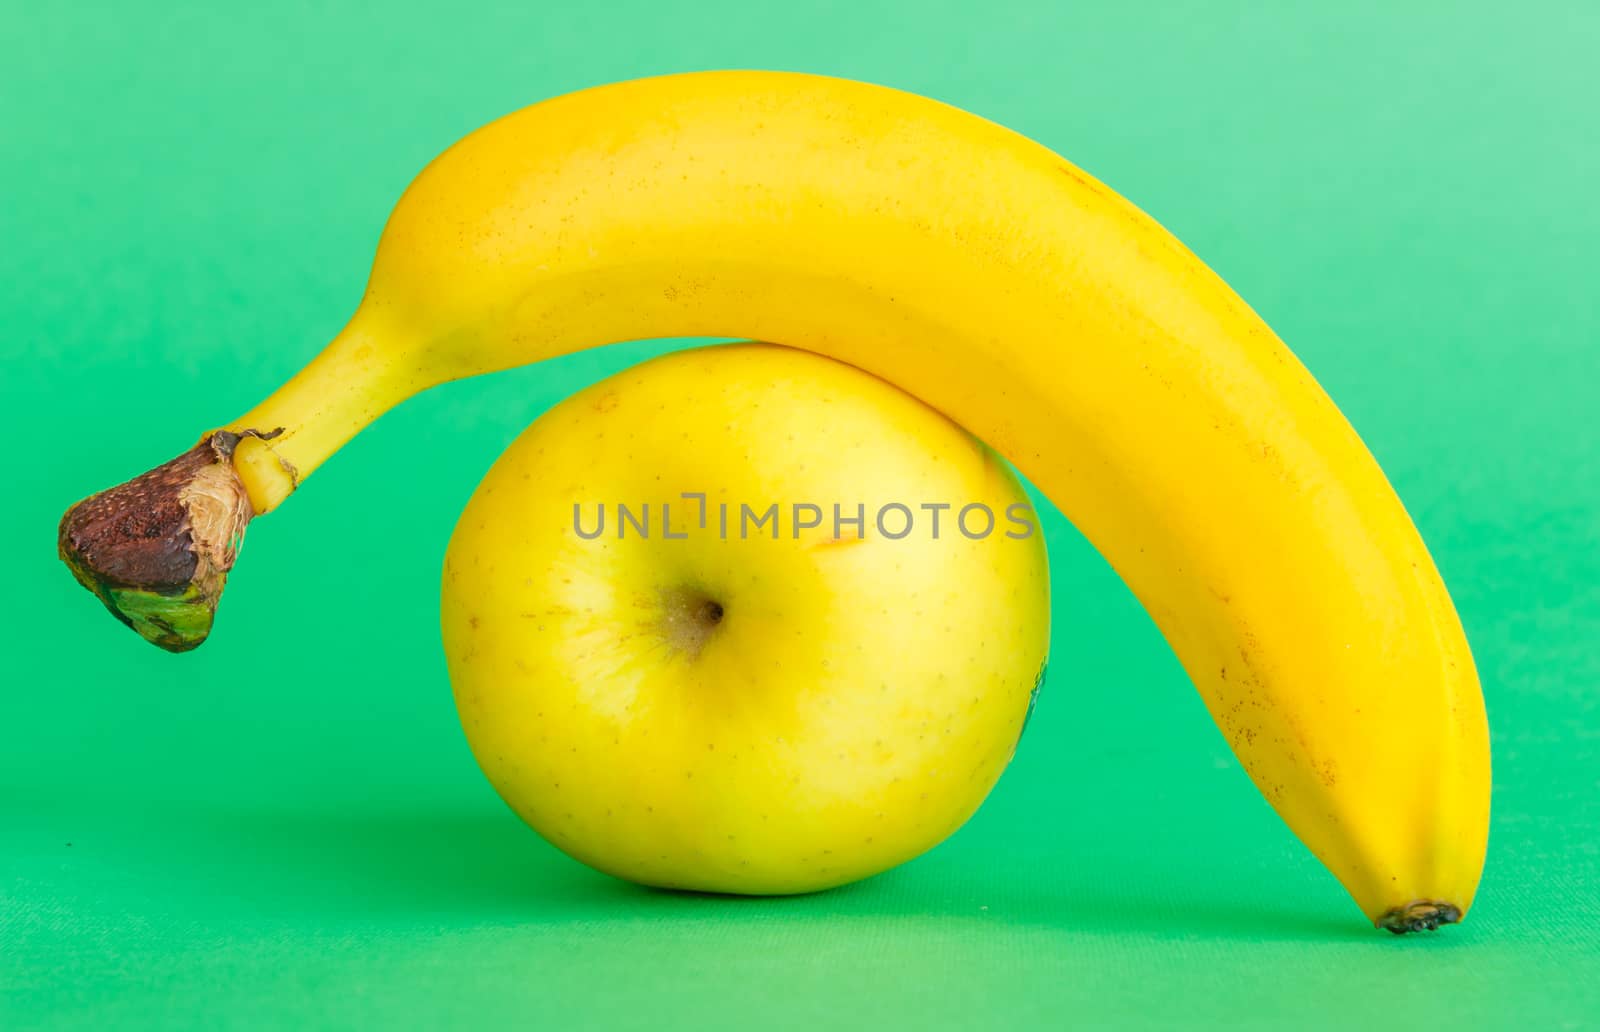 a banana and an apple